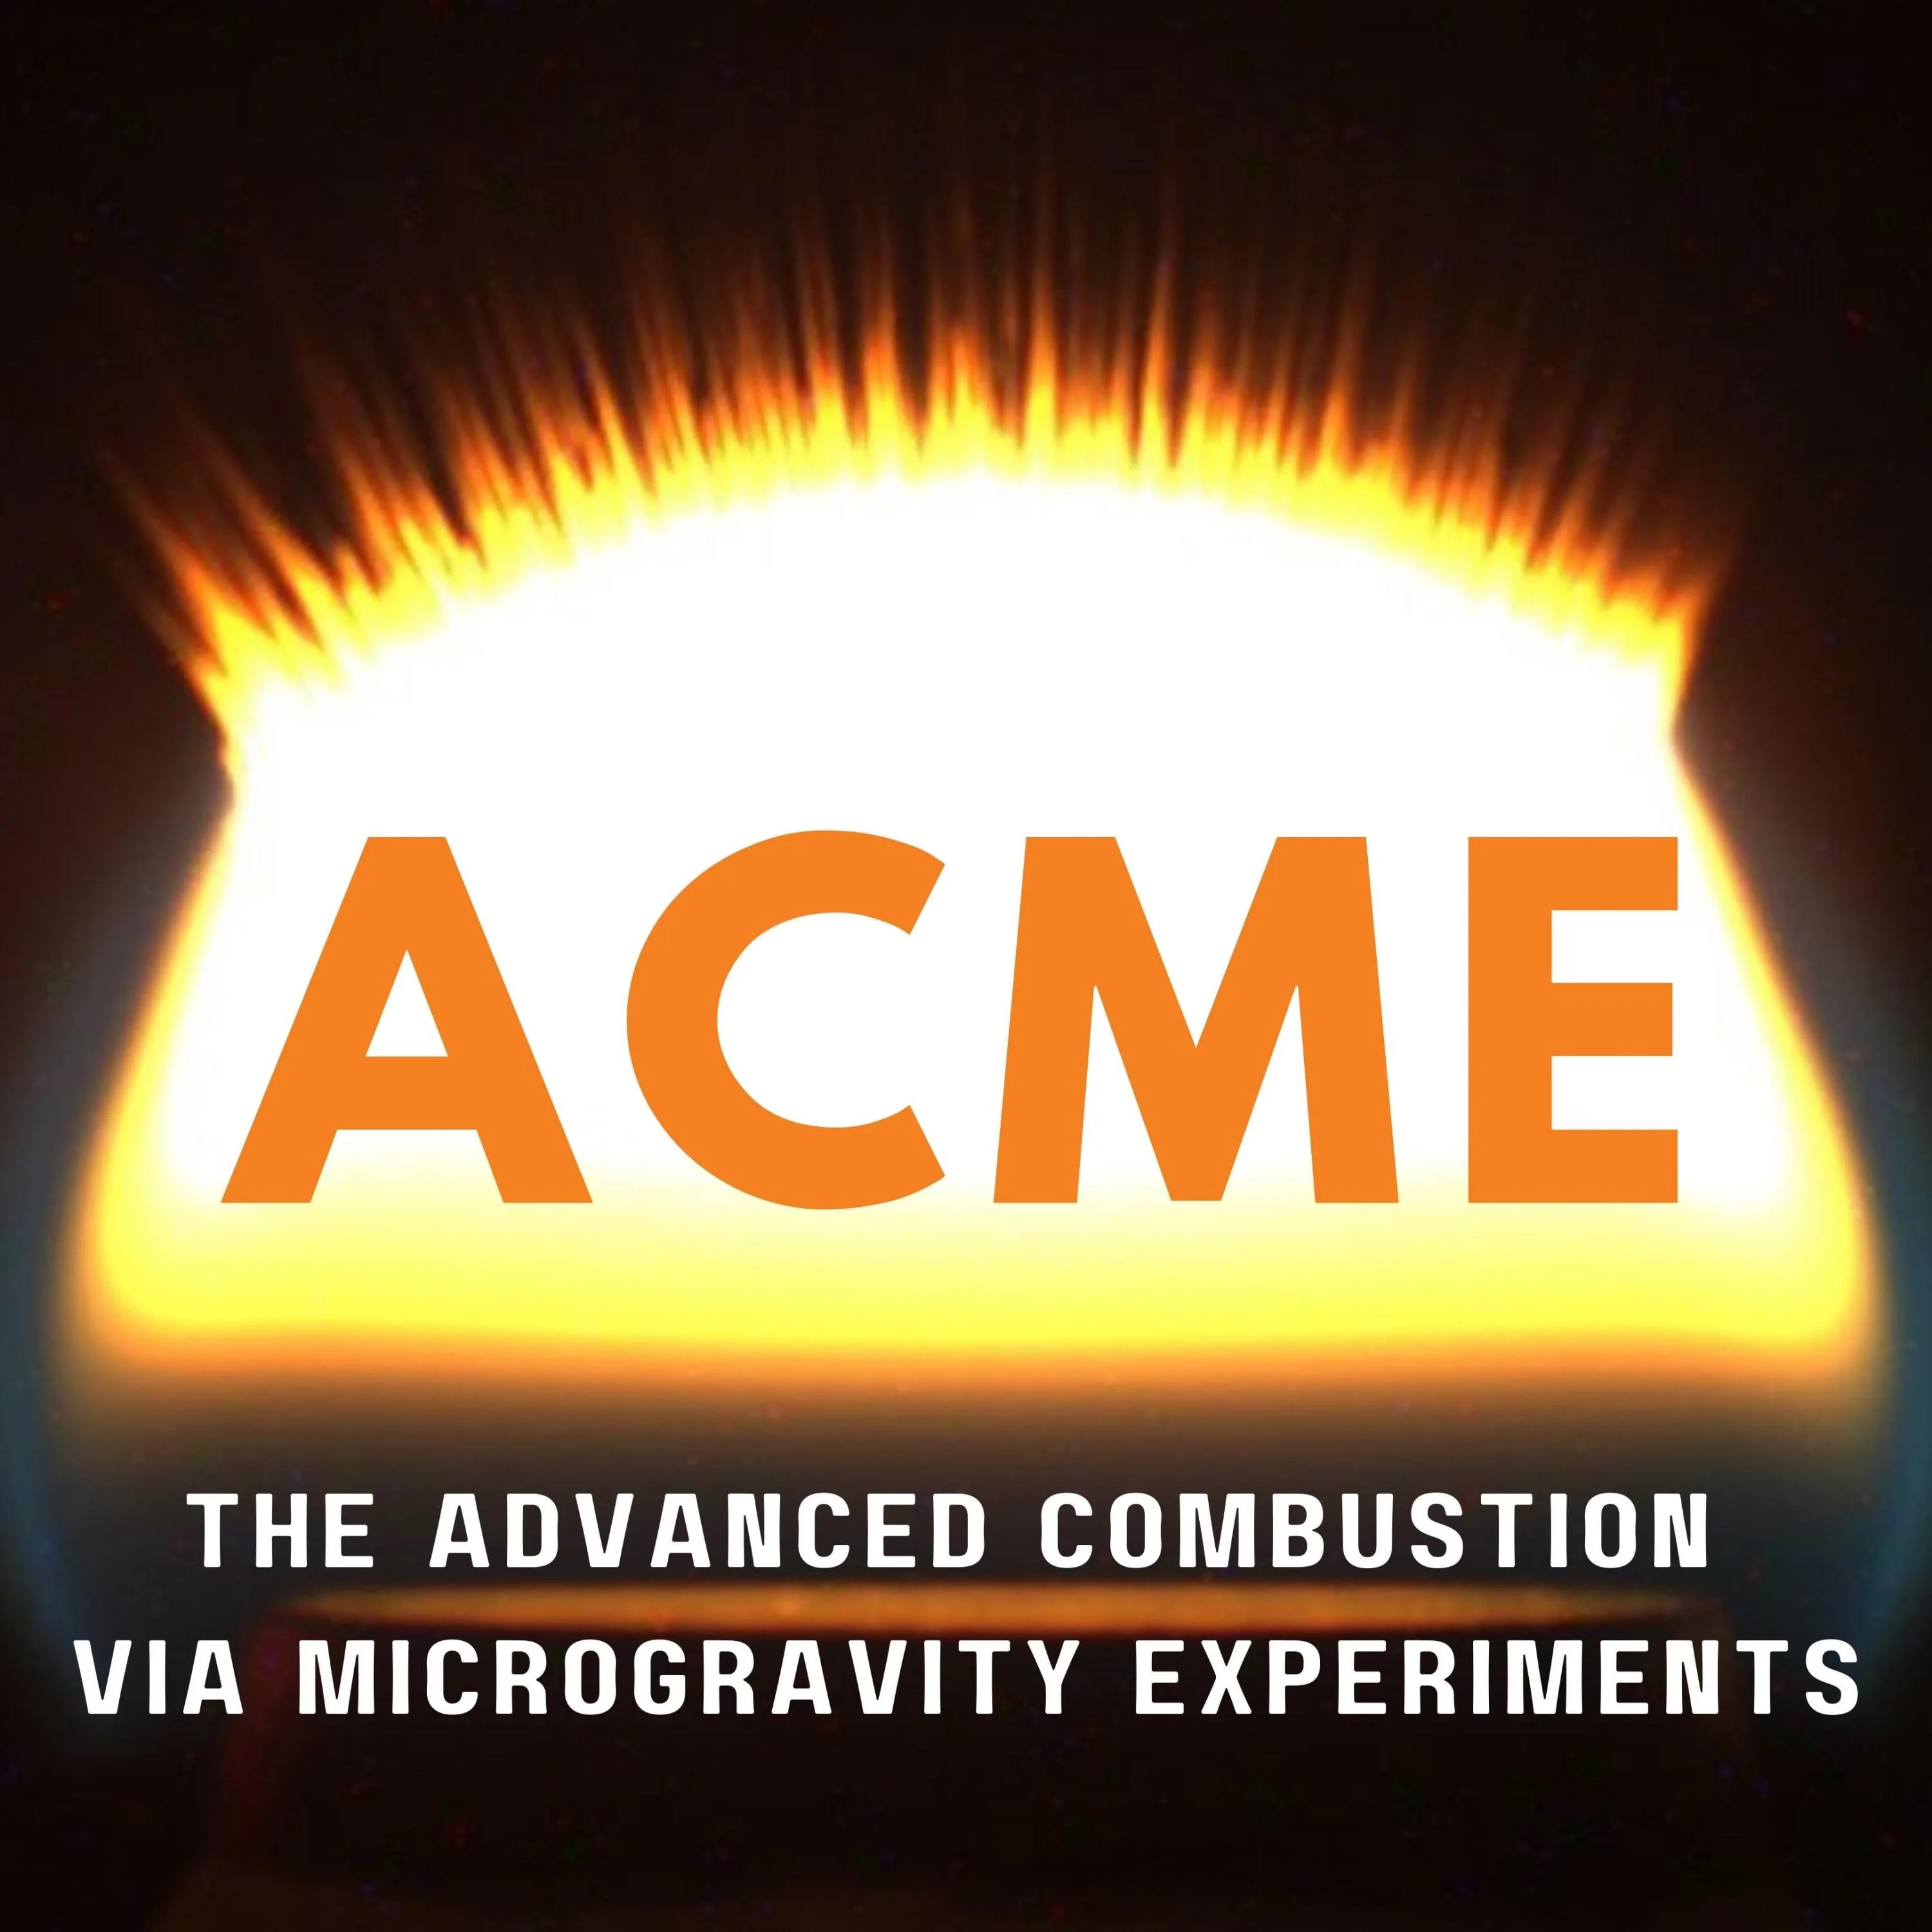 ACME mission